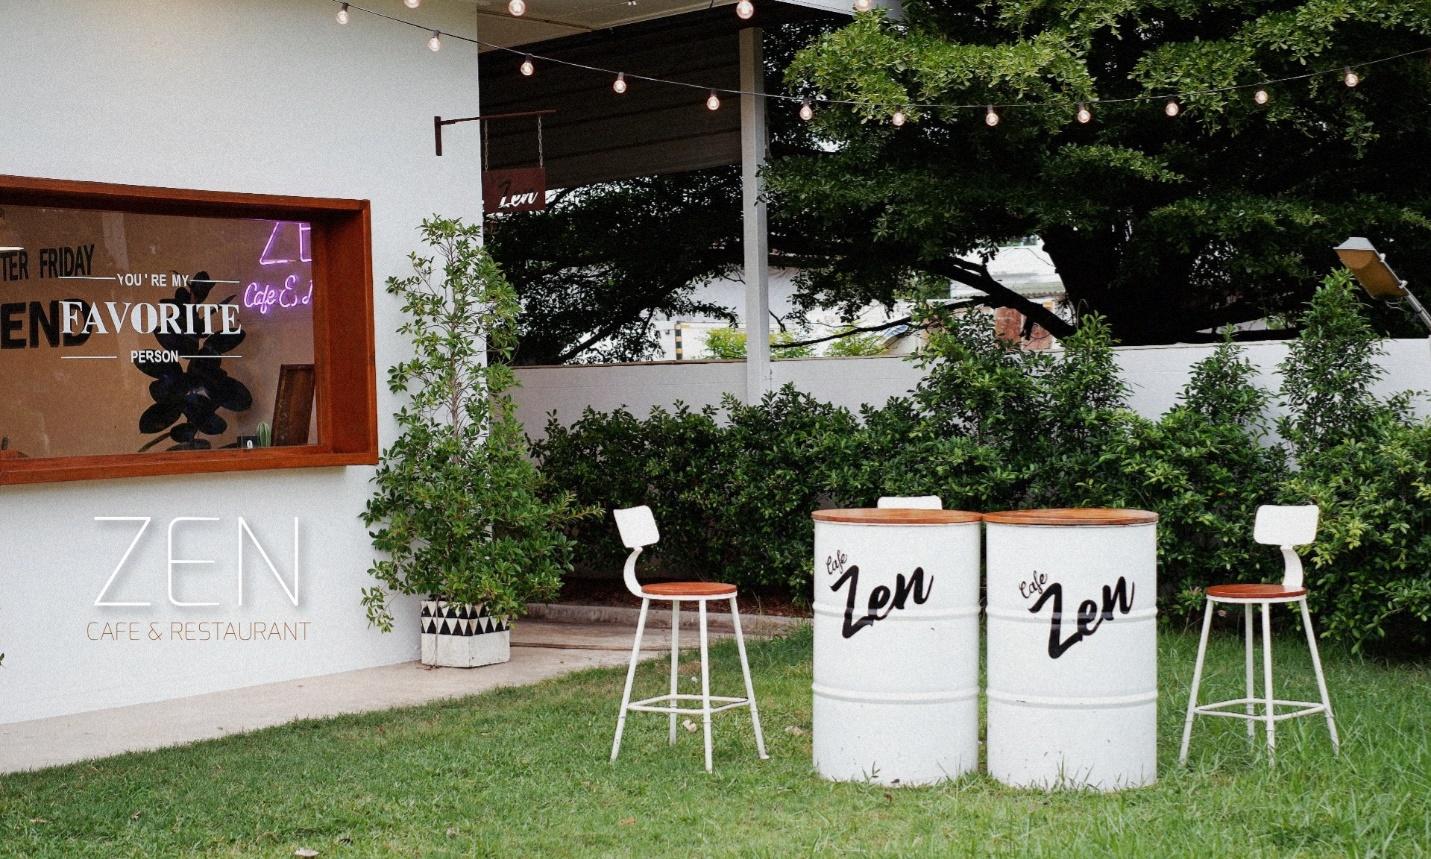 4. Zen Cafe & Restaurant